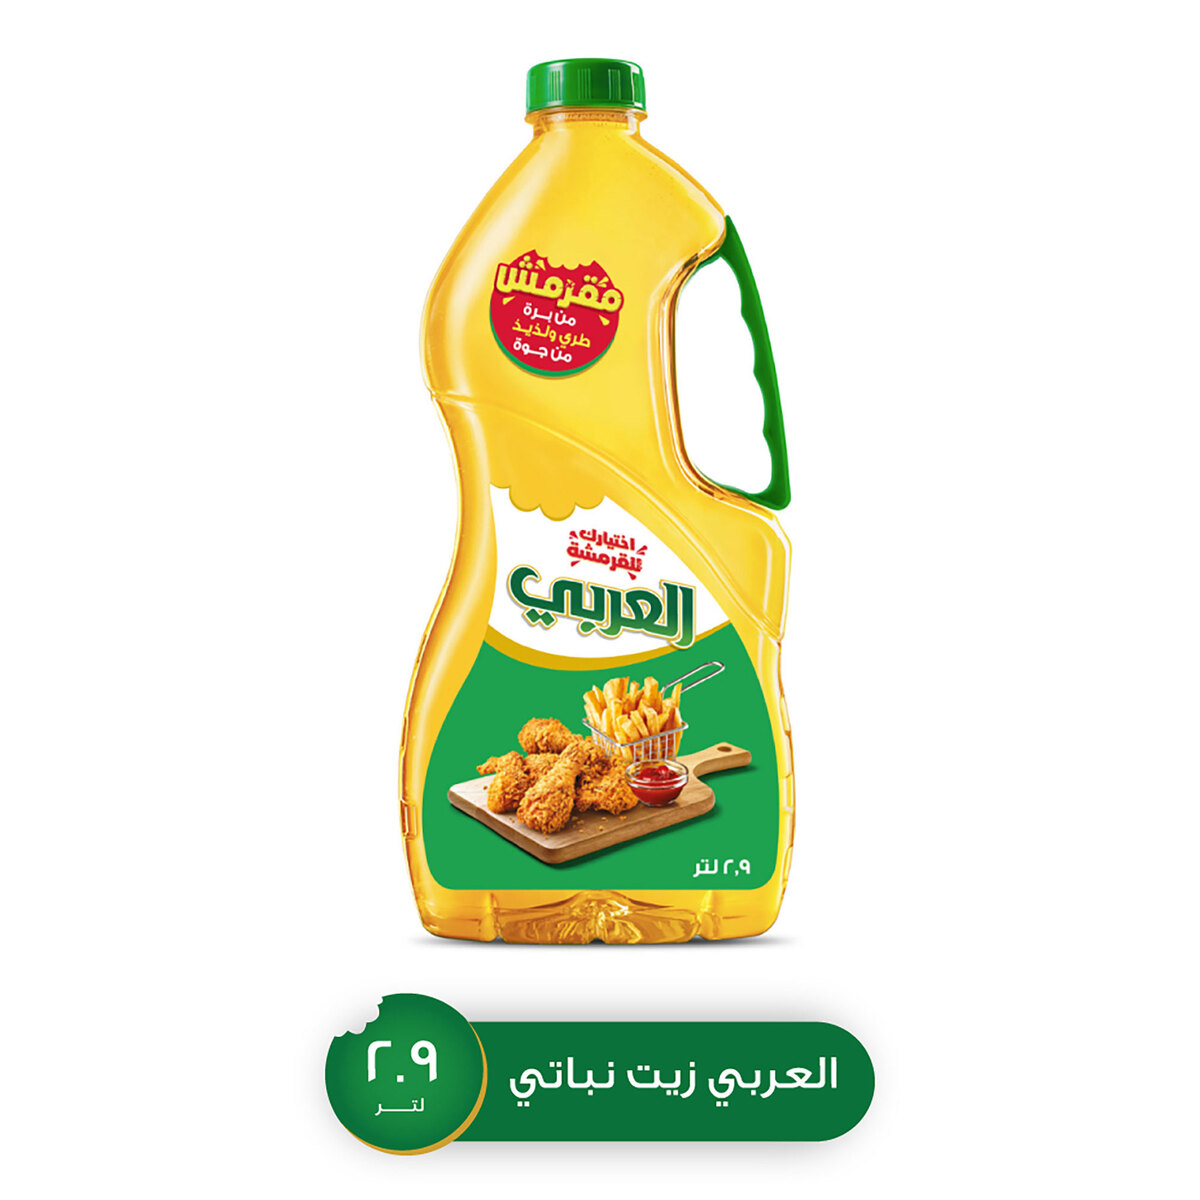 Al Arabi Pure Vegetable Oil 2.9 Litres